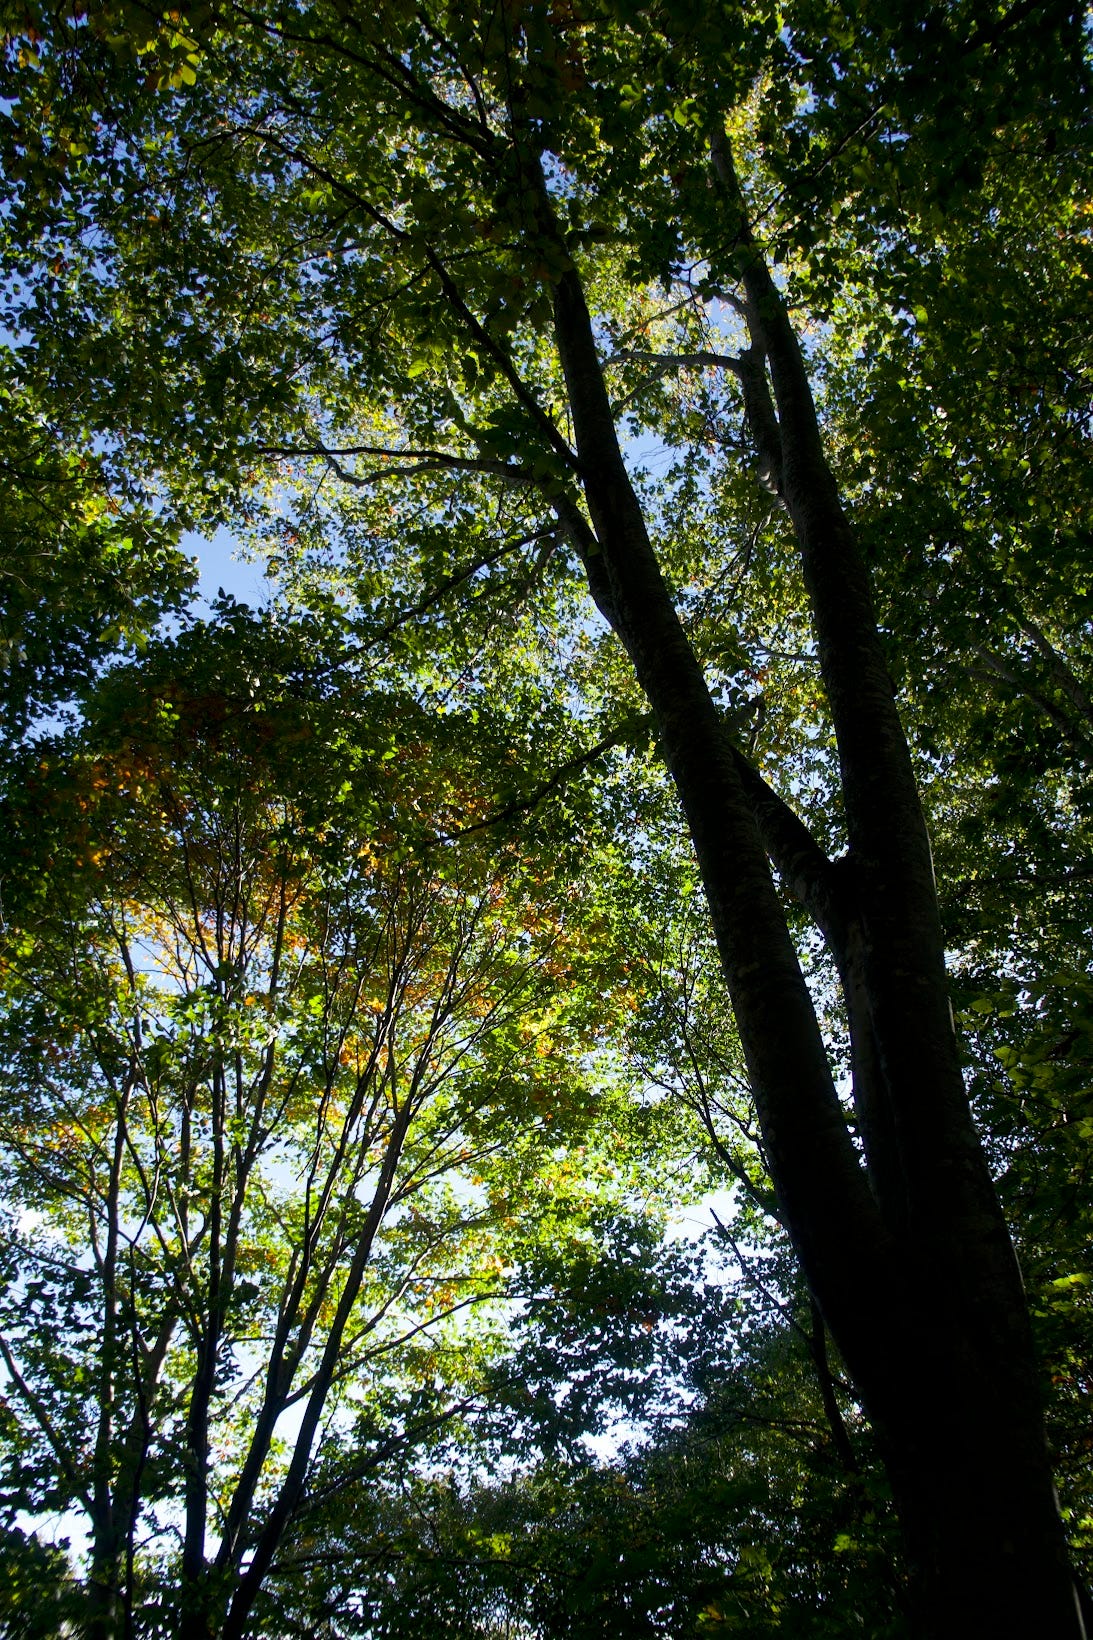 Green and yellow leaves among the canopy of trees on Murayama Ha-yama